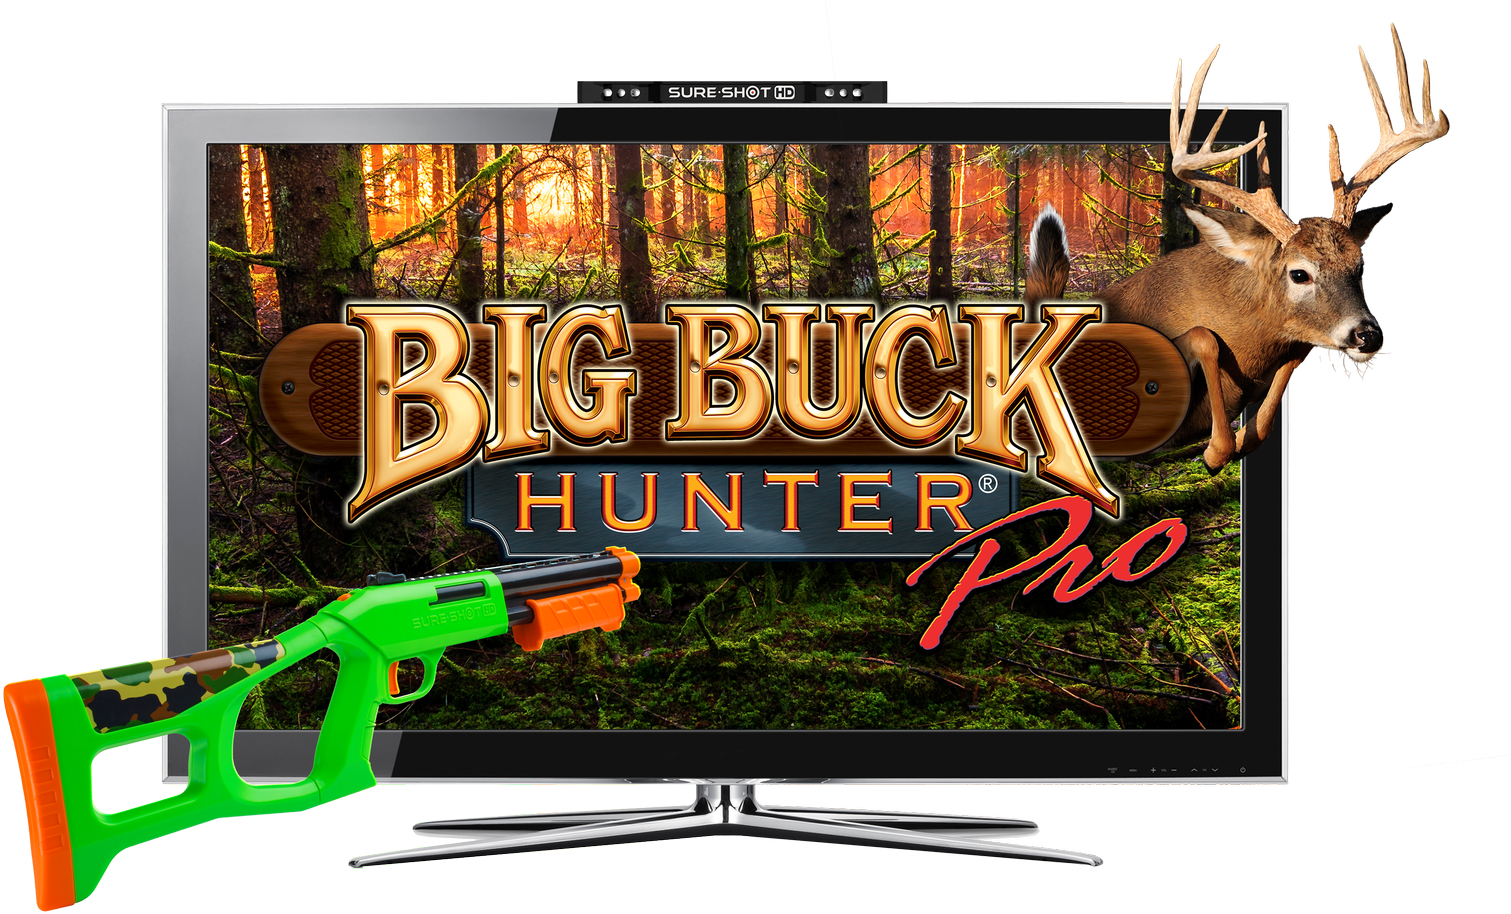 Sure Shot Hd Big Buck Hunter Pro Video Game System, - Big Buck Hunter Pro Clipart (1600x975), Png Download